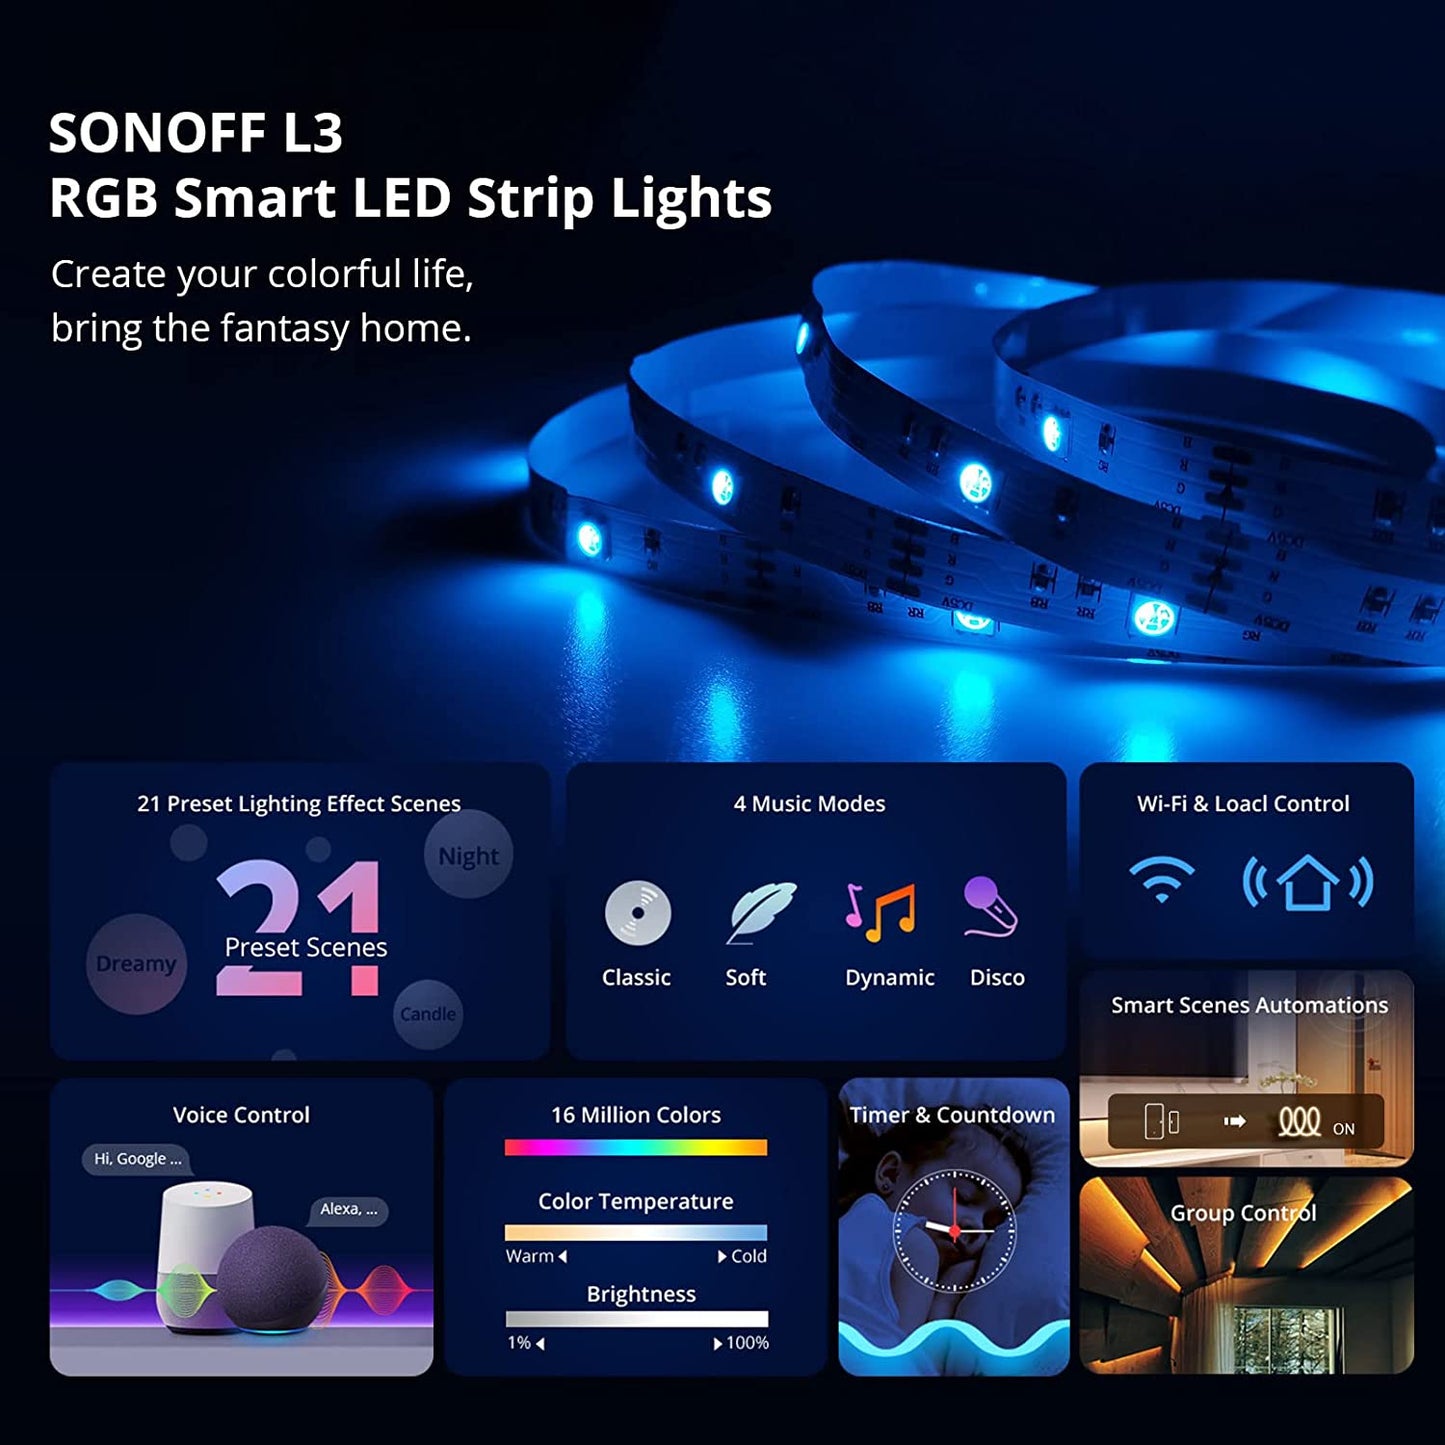 Banda LED Sonoff Wifi RGB L3-5M, 5m, Smart, IP20, Sincronizare Muzica, 90 LED m, Alimentare USB